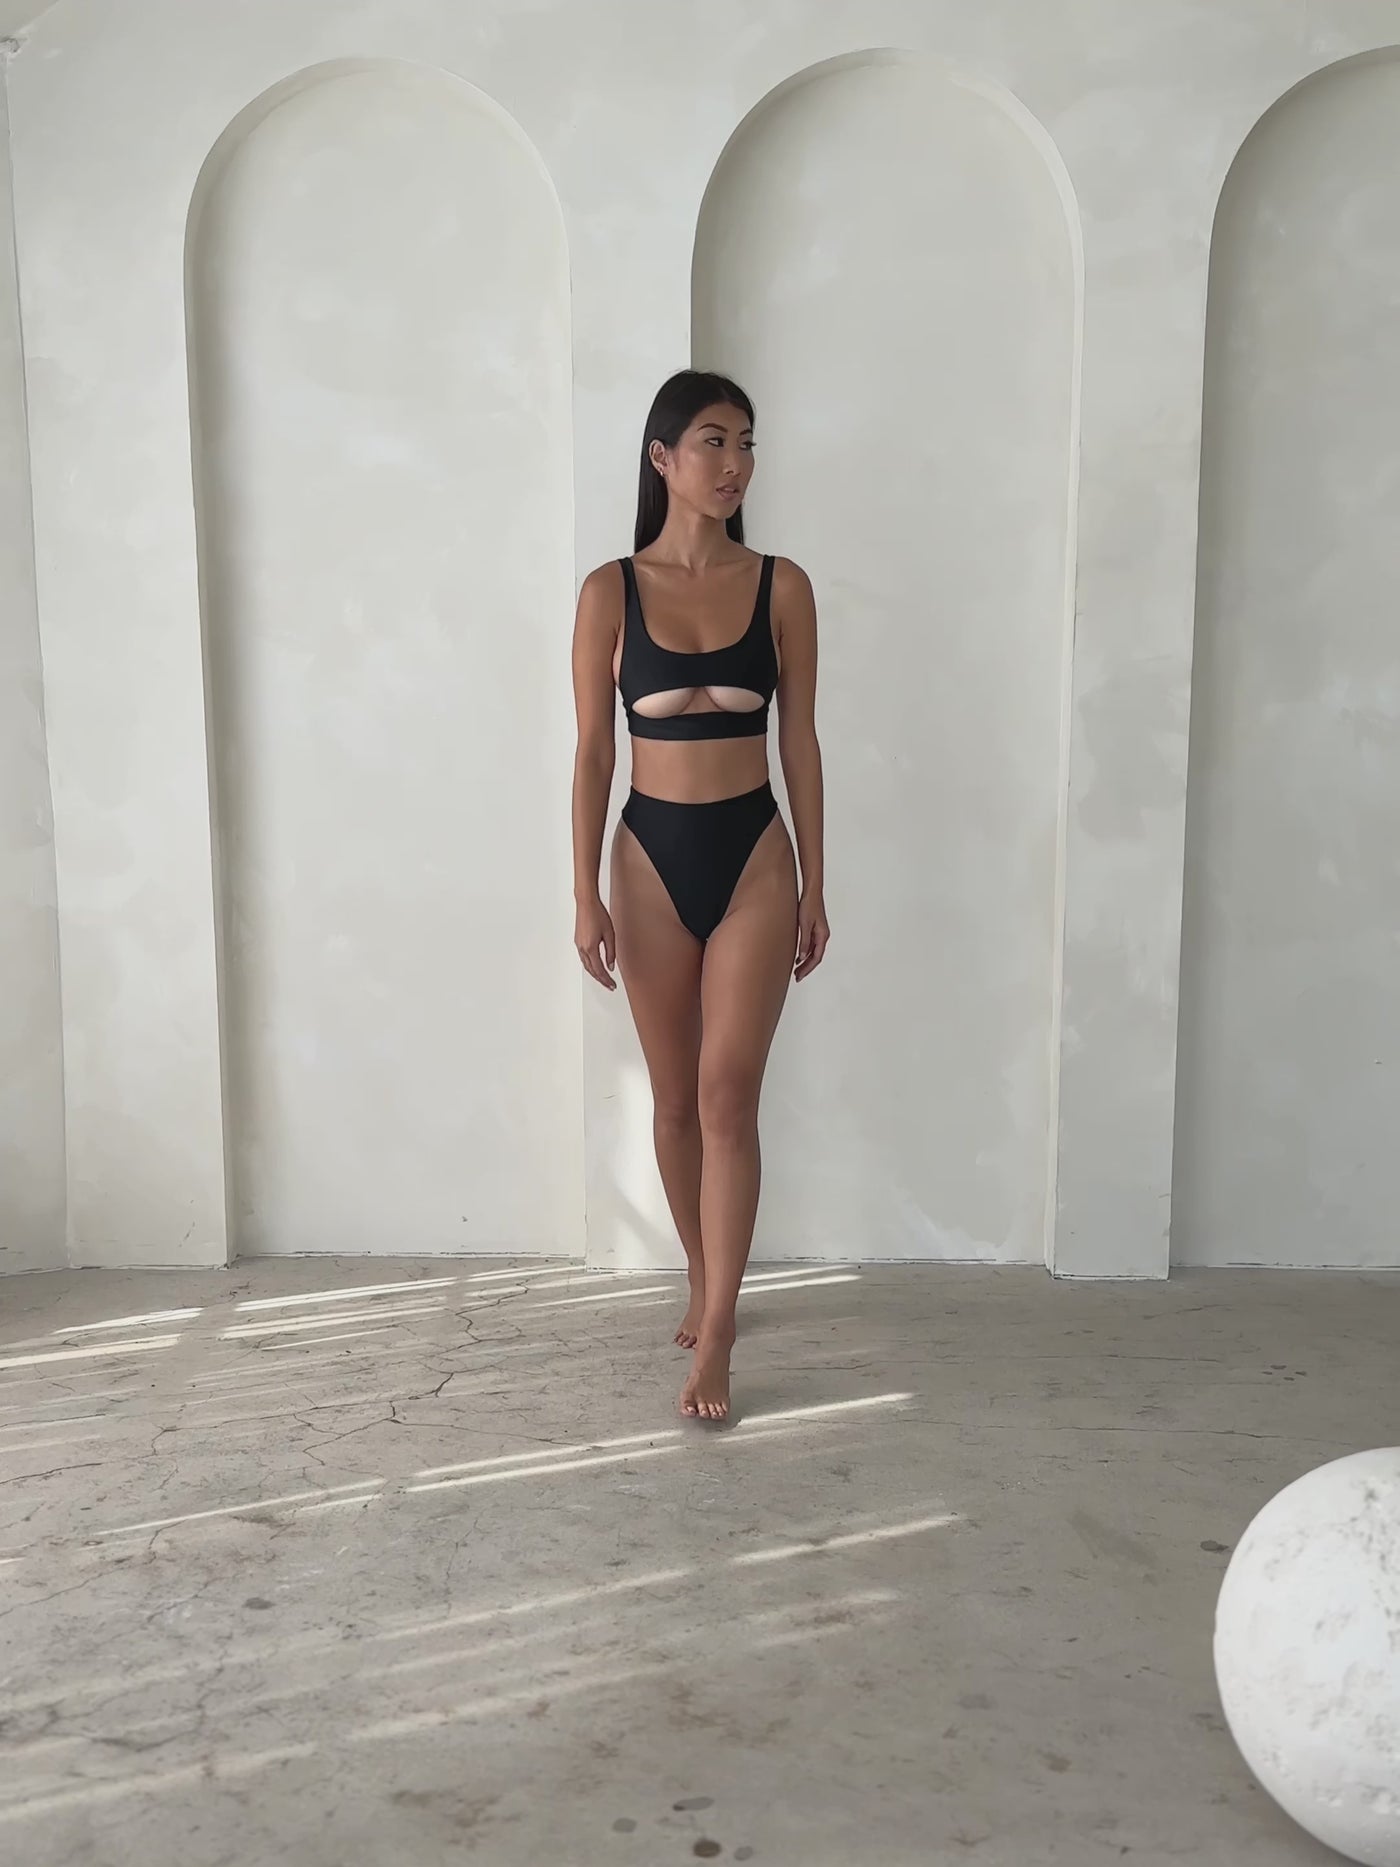 Lucky Brand On the Grid Reversible Bralette Bikini Top